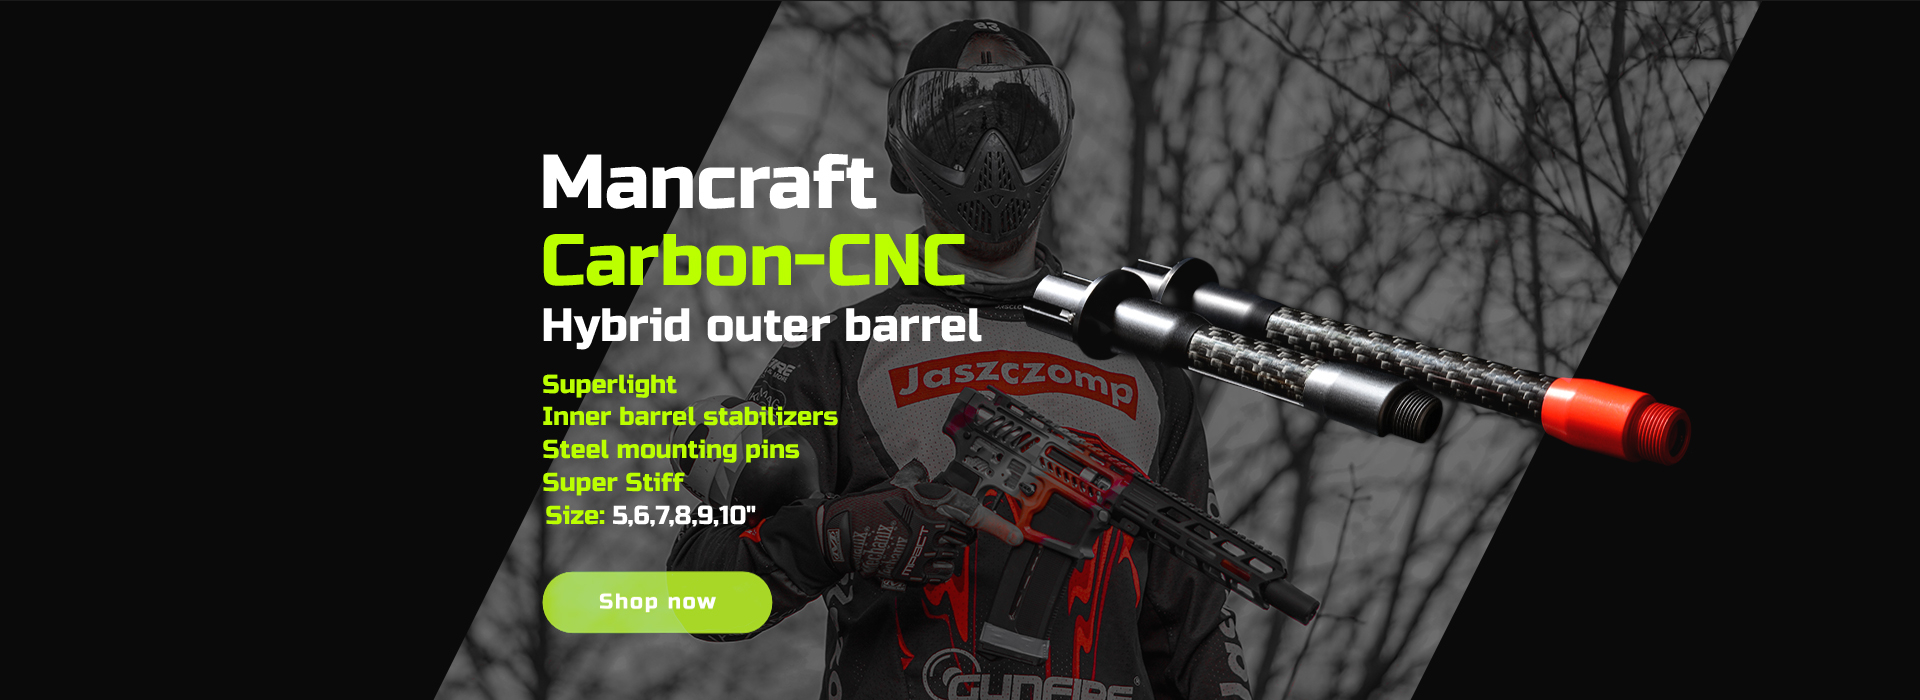 Mancraft MSB - Hybrid Carbon-CNC outer barrel